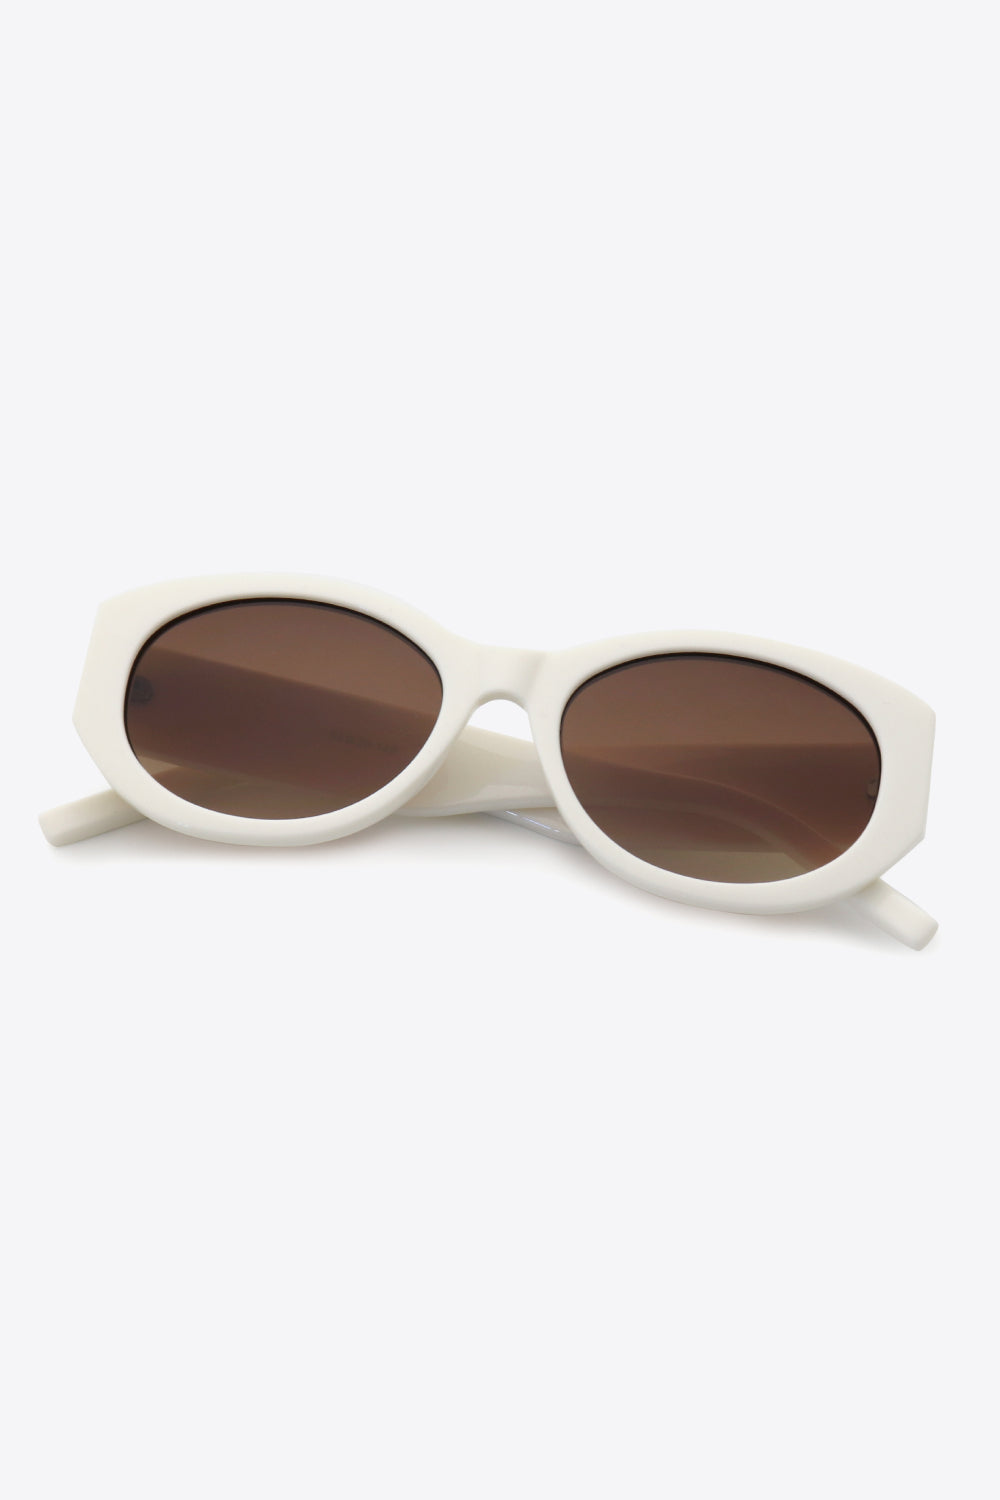 UV400 Polycarbonate Sunglasses - SELFTRITSS